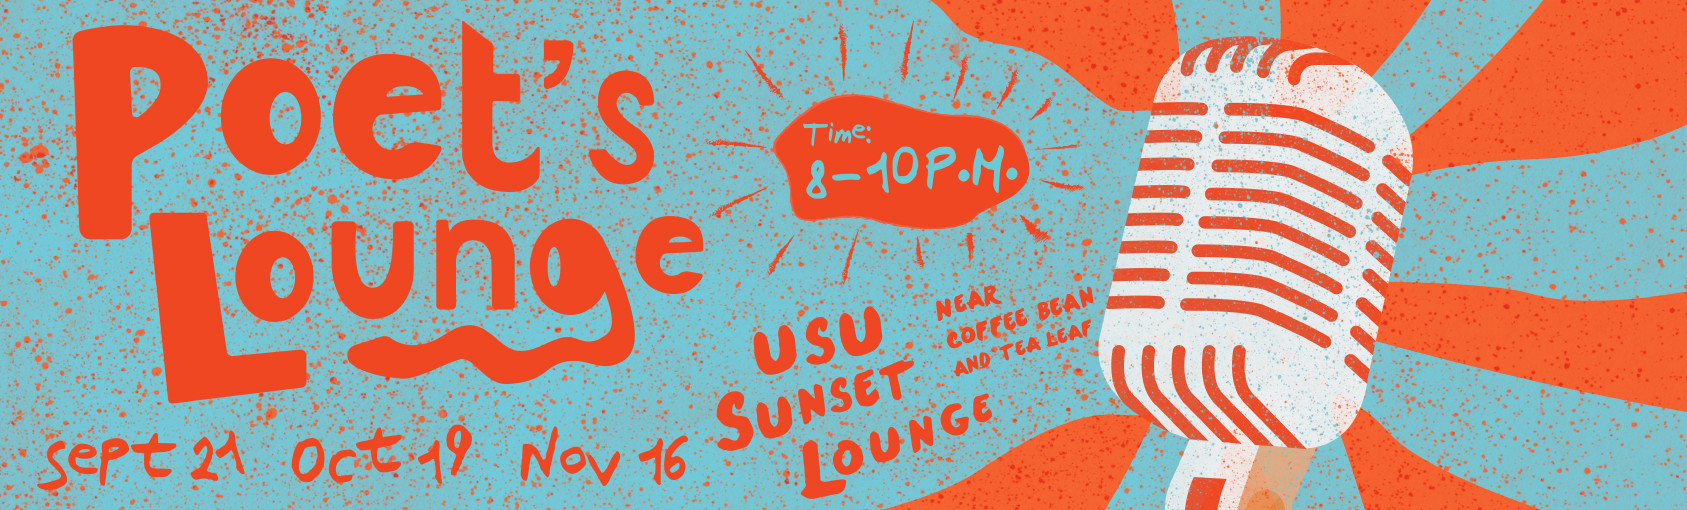 Poet’s Lounge banner